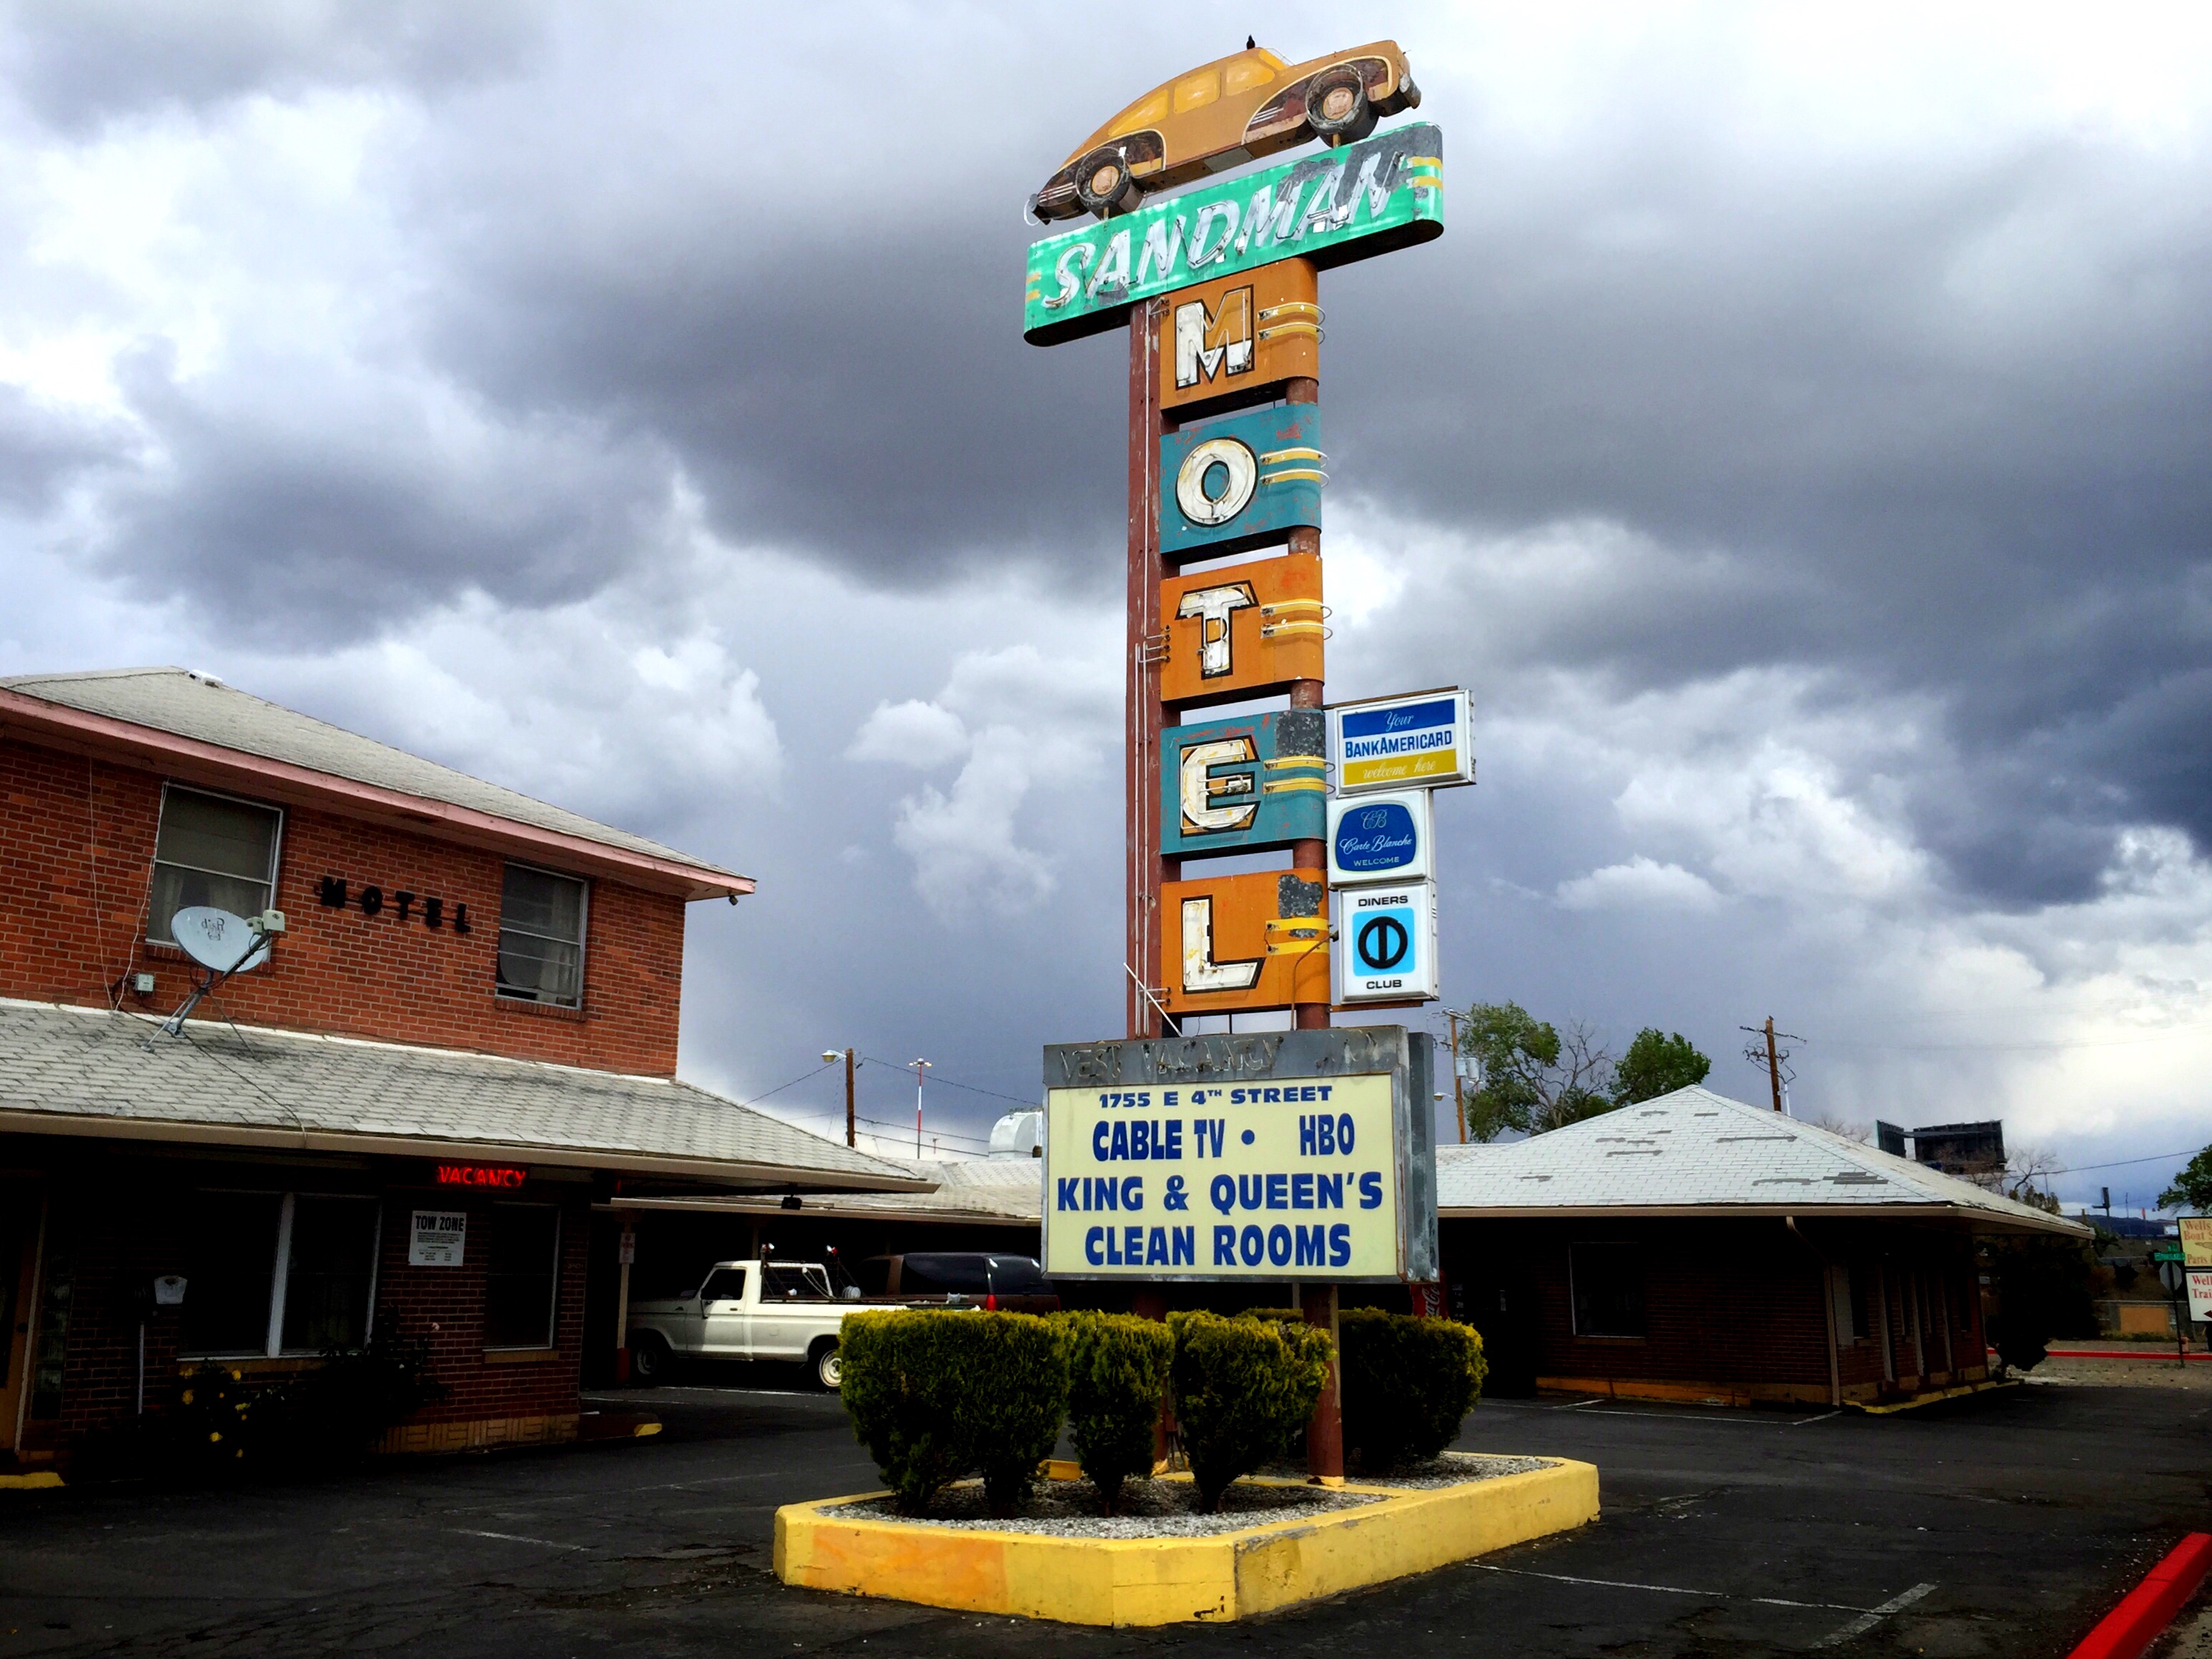 Sandman Motel - 1755 East 4th Street, Reno, Nevada U.S.A. - May 22, 2015